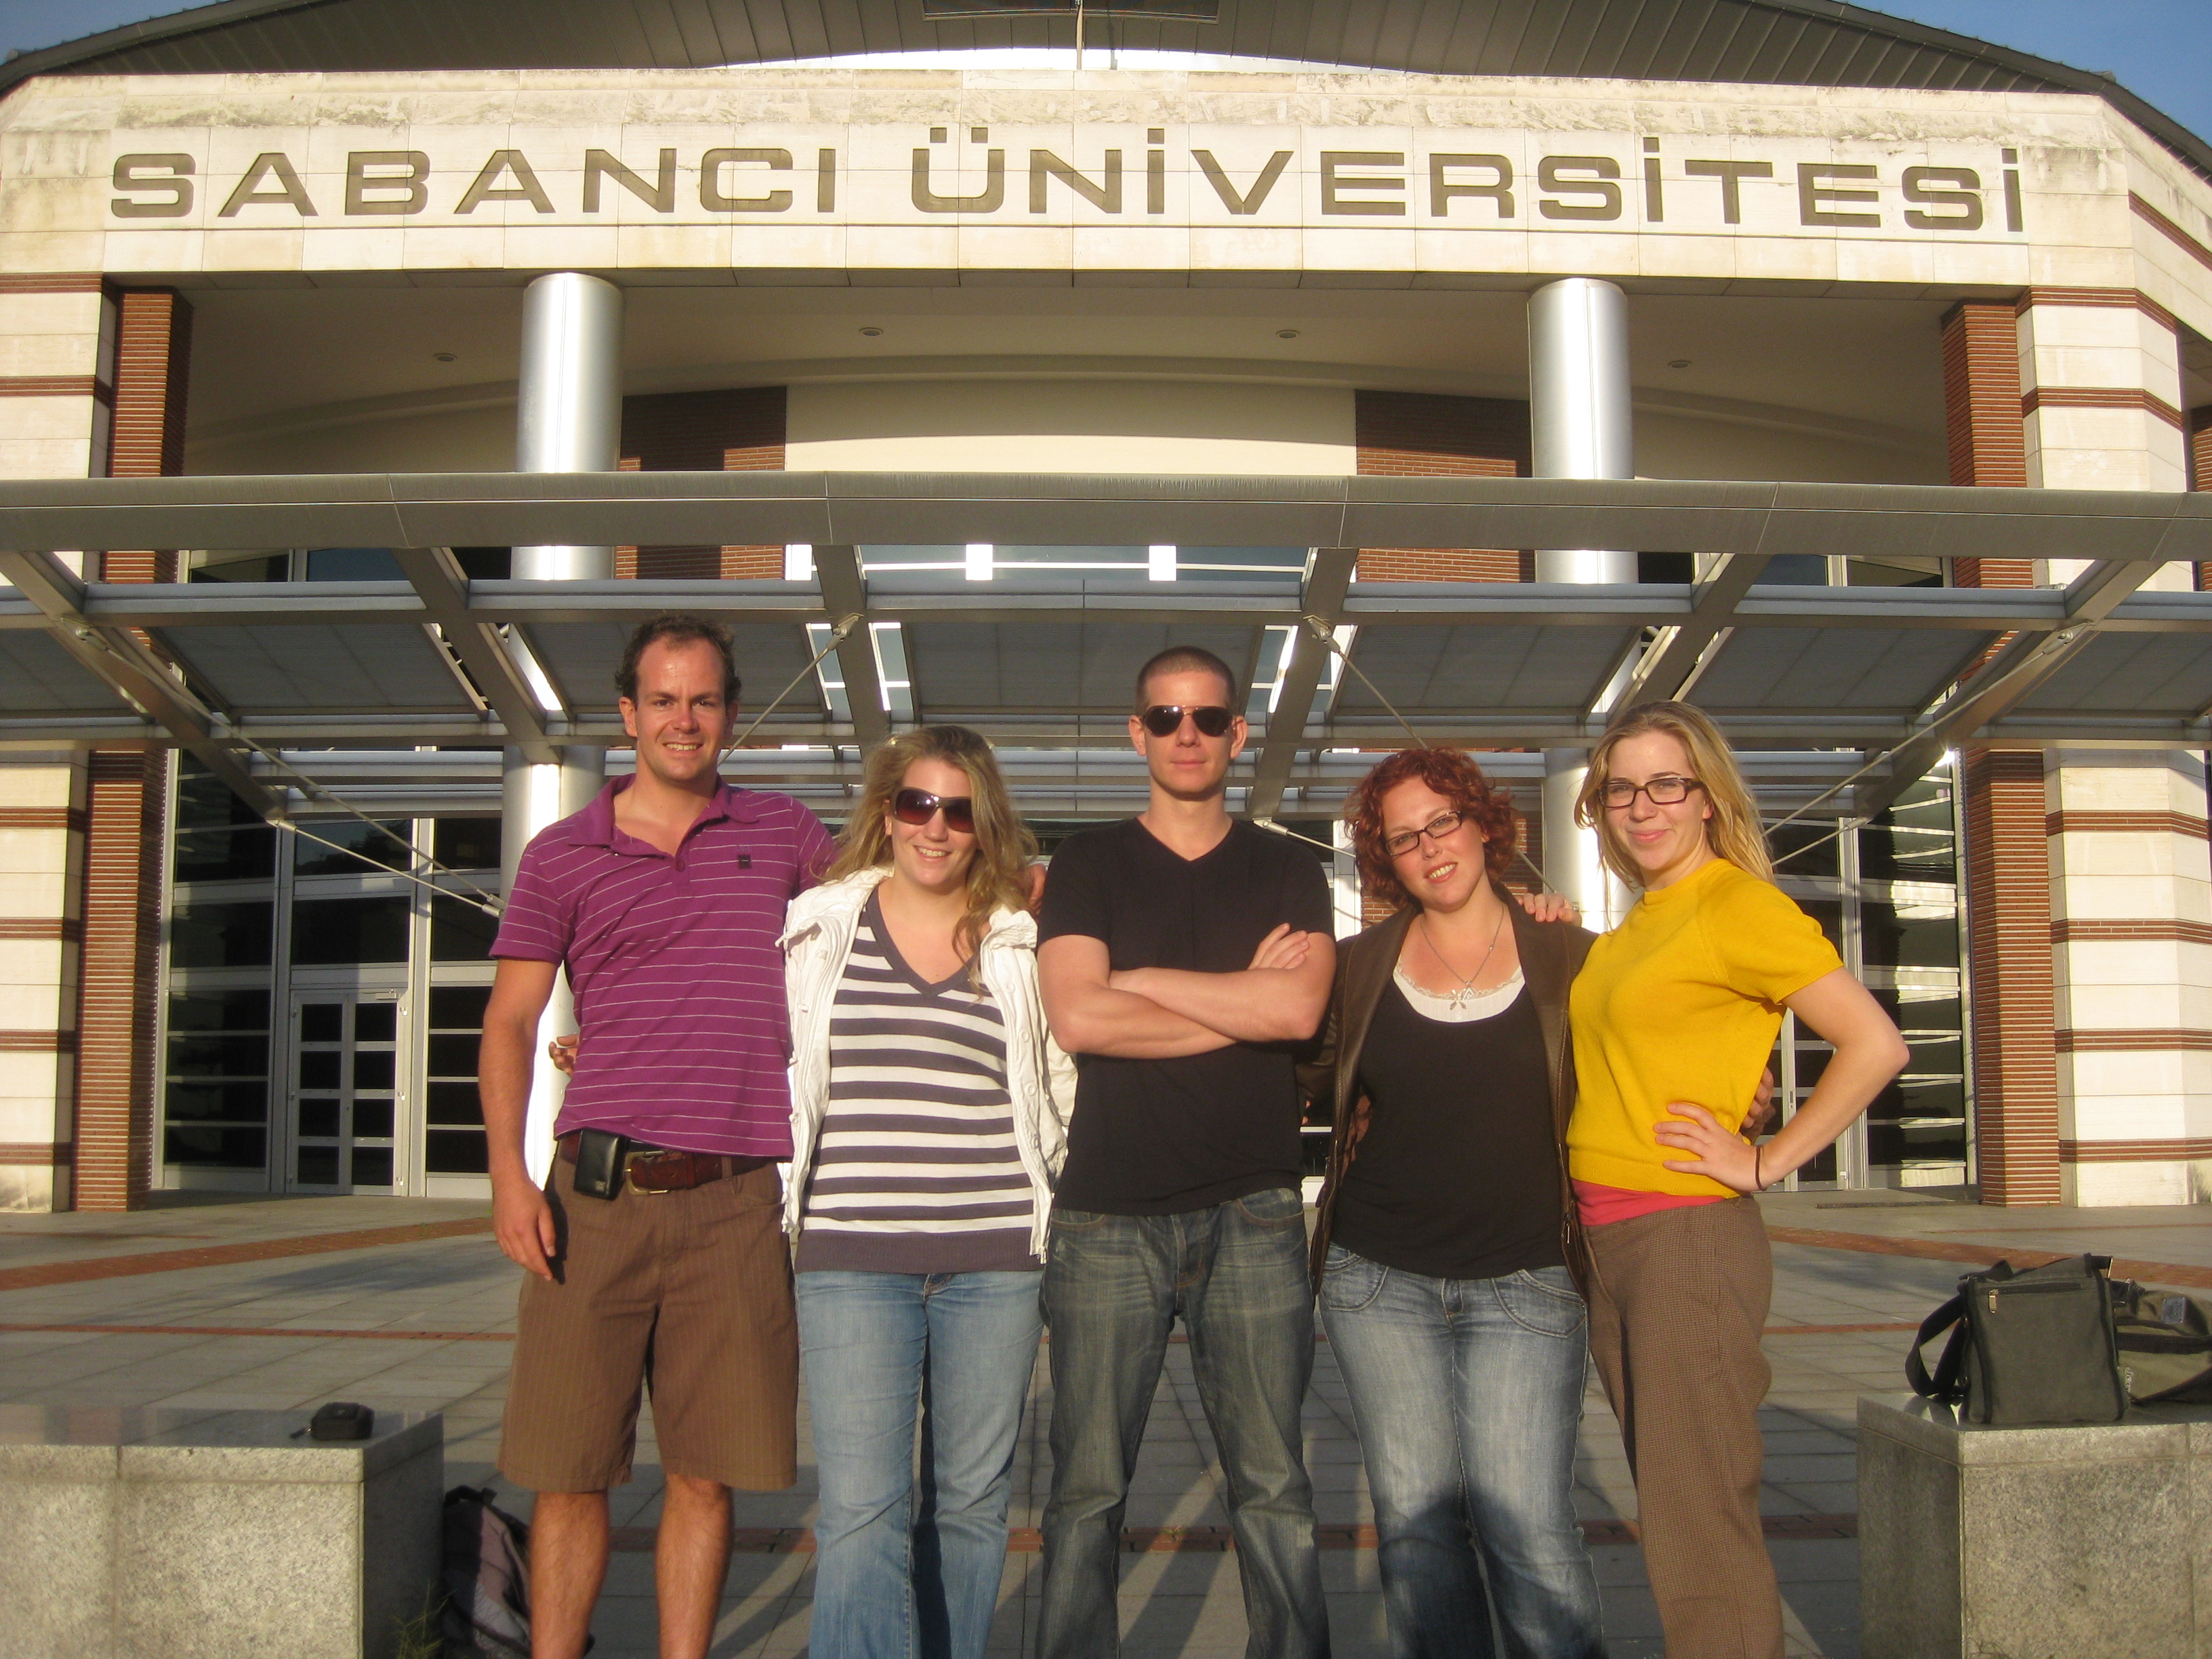 Sabanci University, Turkey